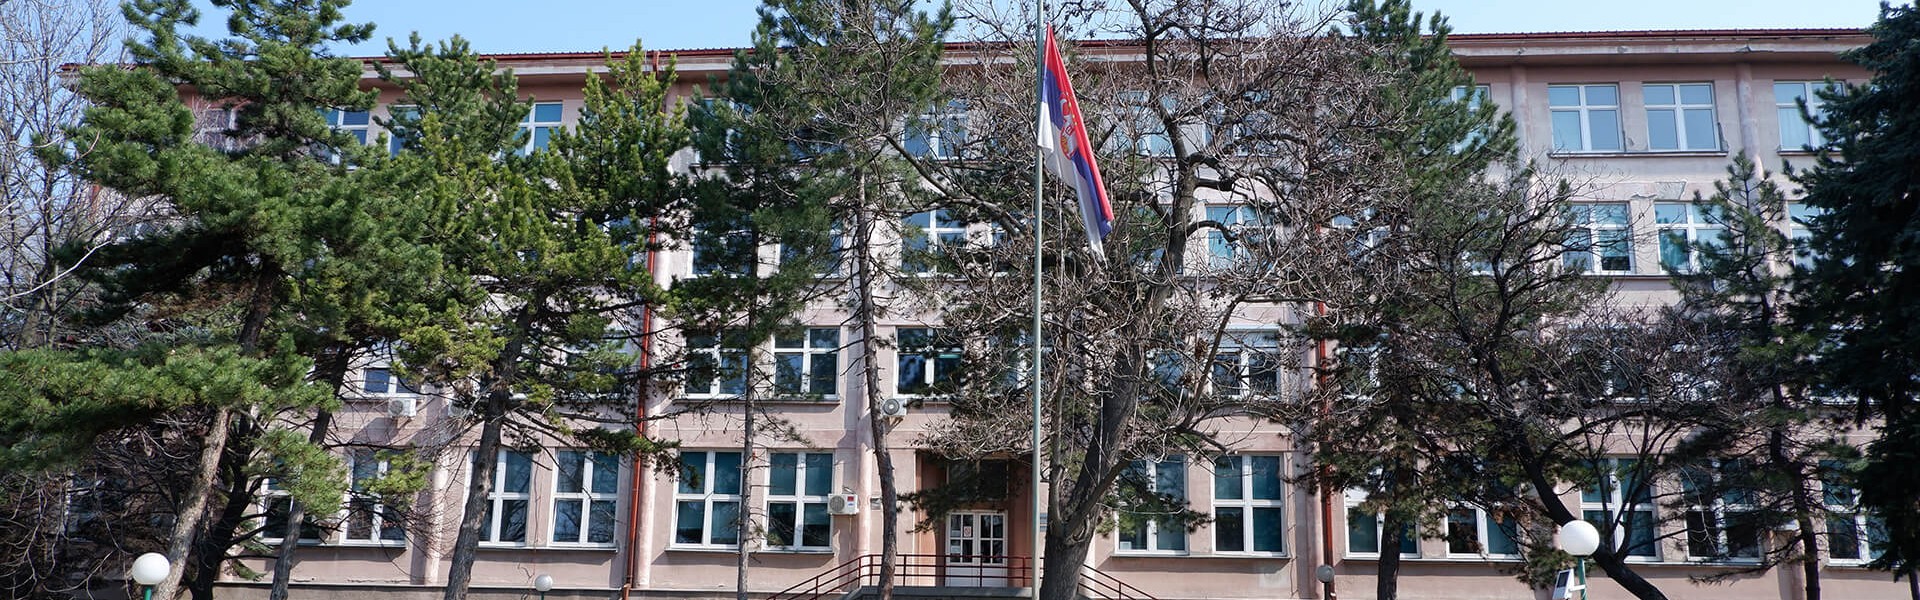 Војномедицински центар Карабурма